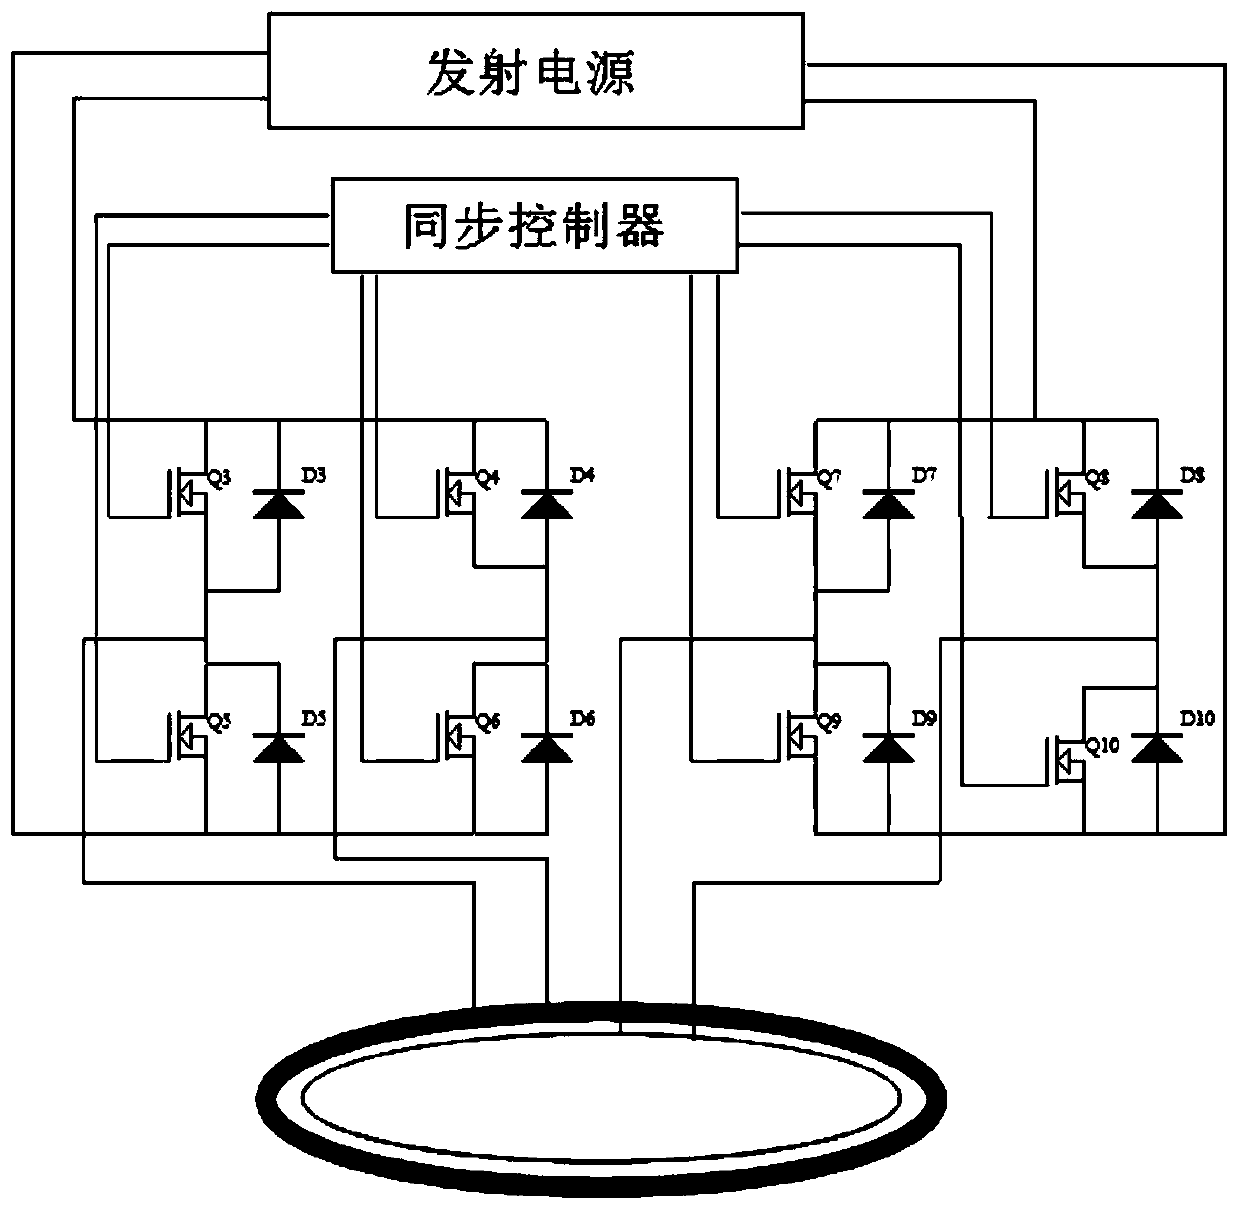 Double-coil coupled multi-wave survey system